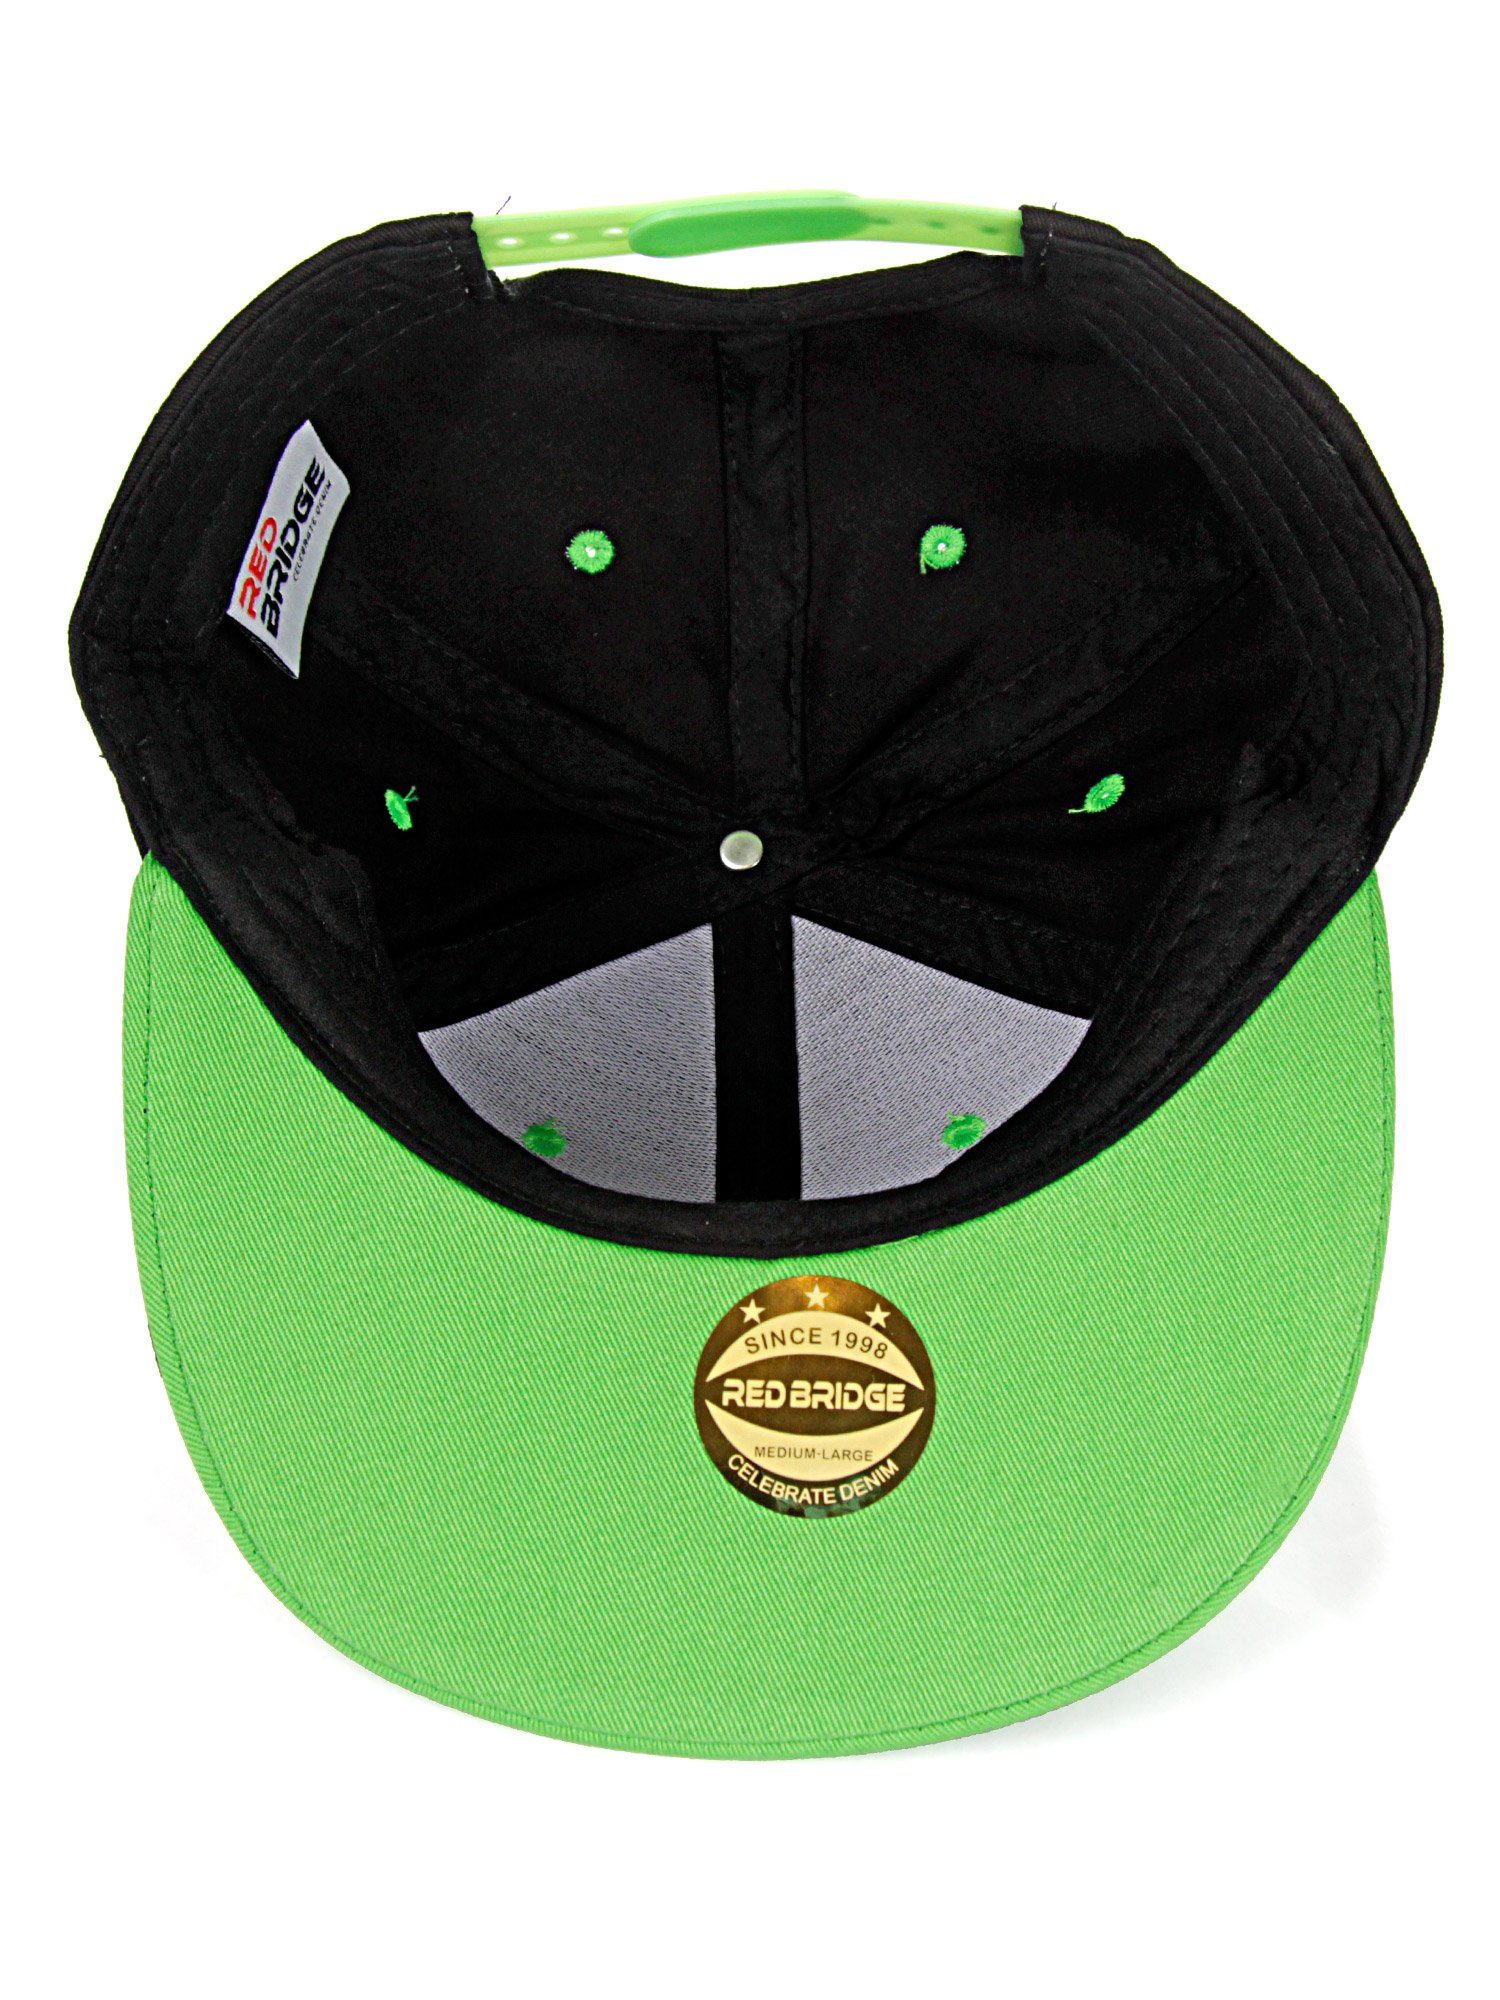 RedBridge Baseball Cap schwarz-grün mit Wellingborough Druckverschluss